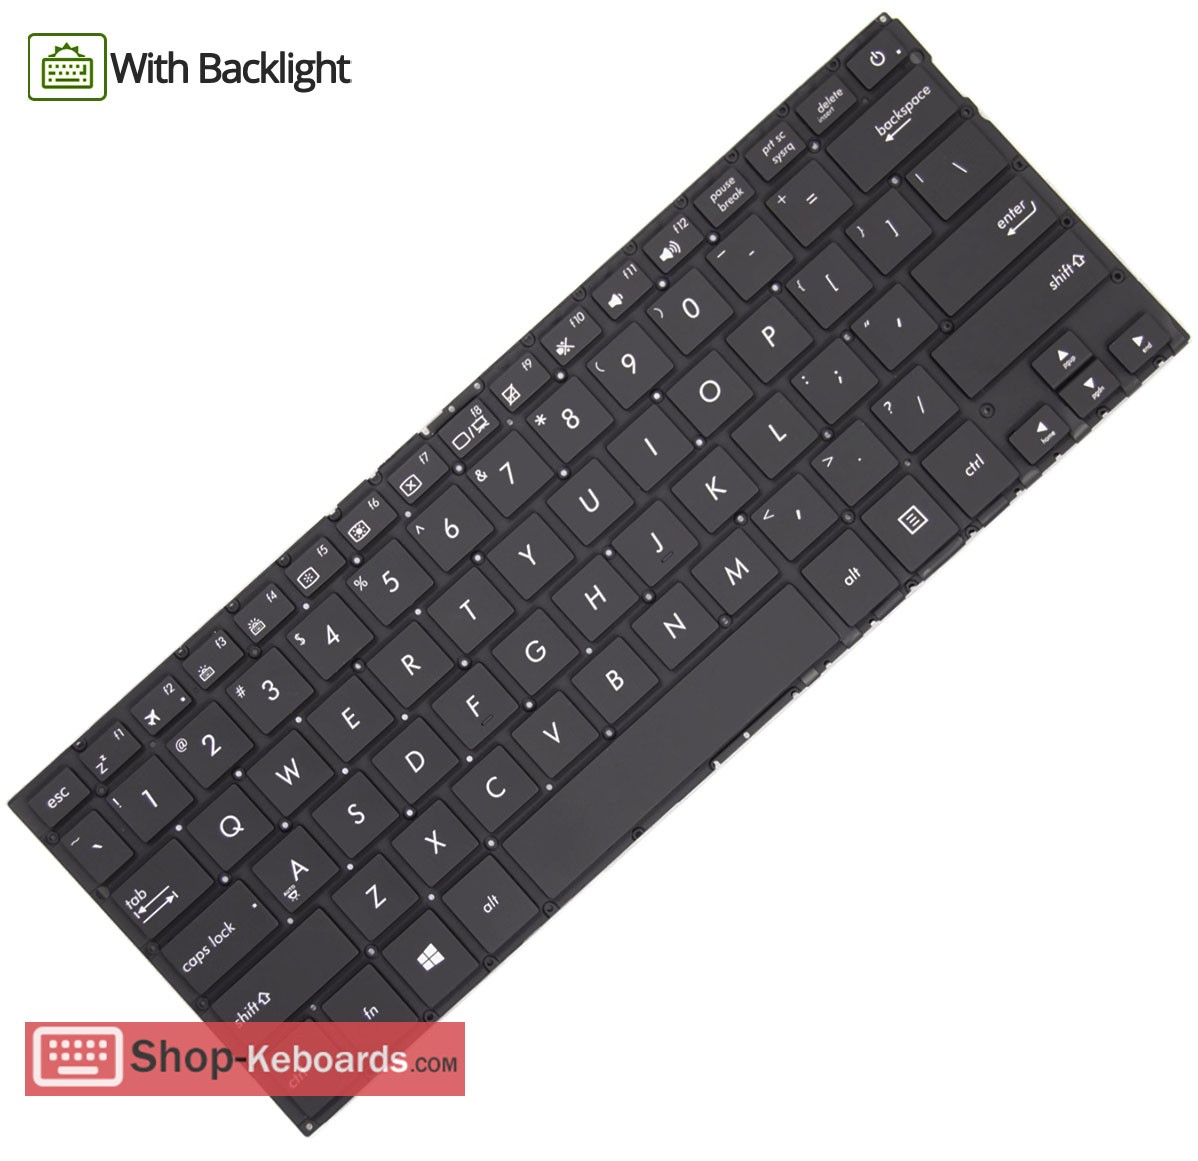 Asus 0KNB0-2627UK00 Keyboard replacement